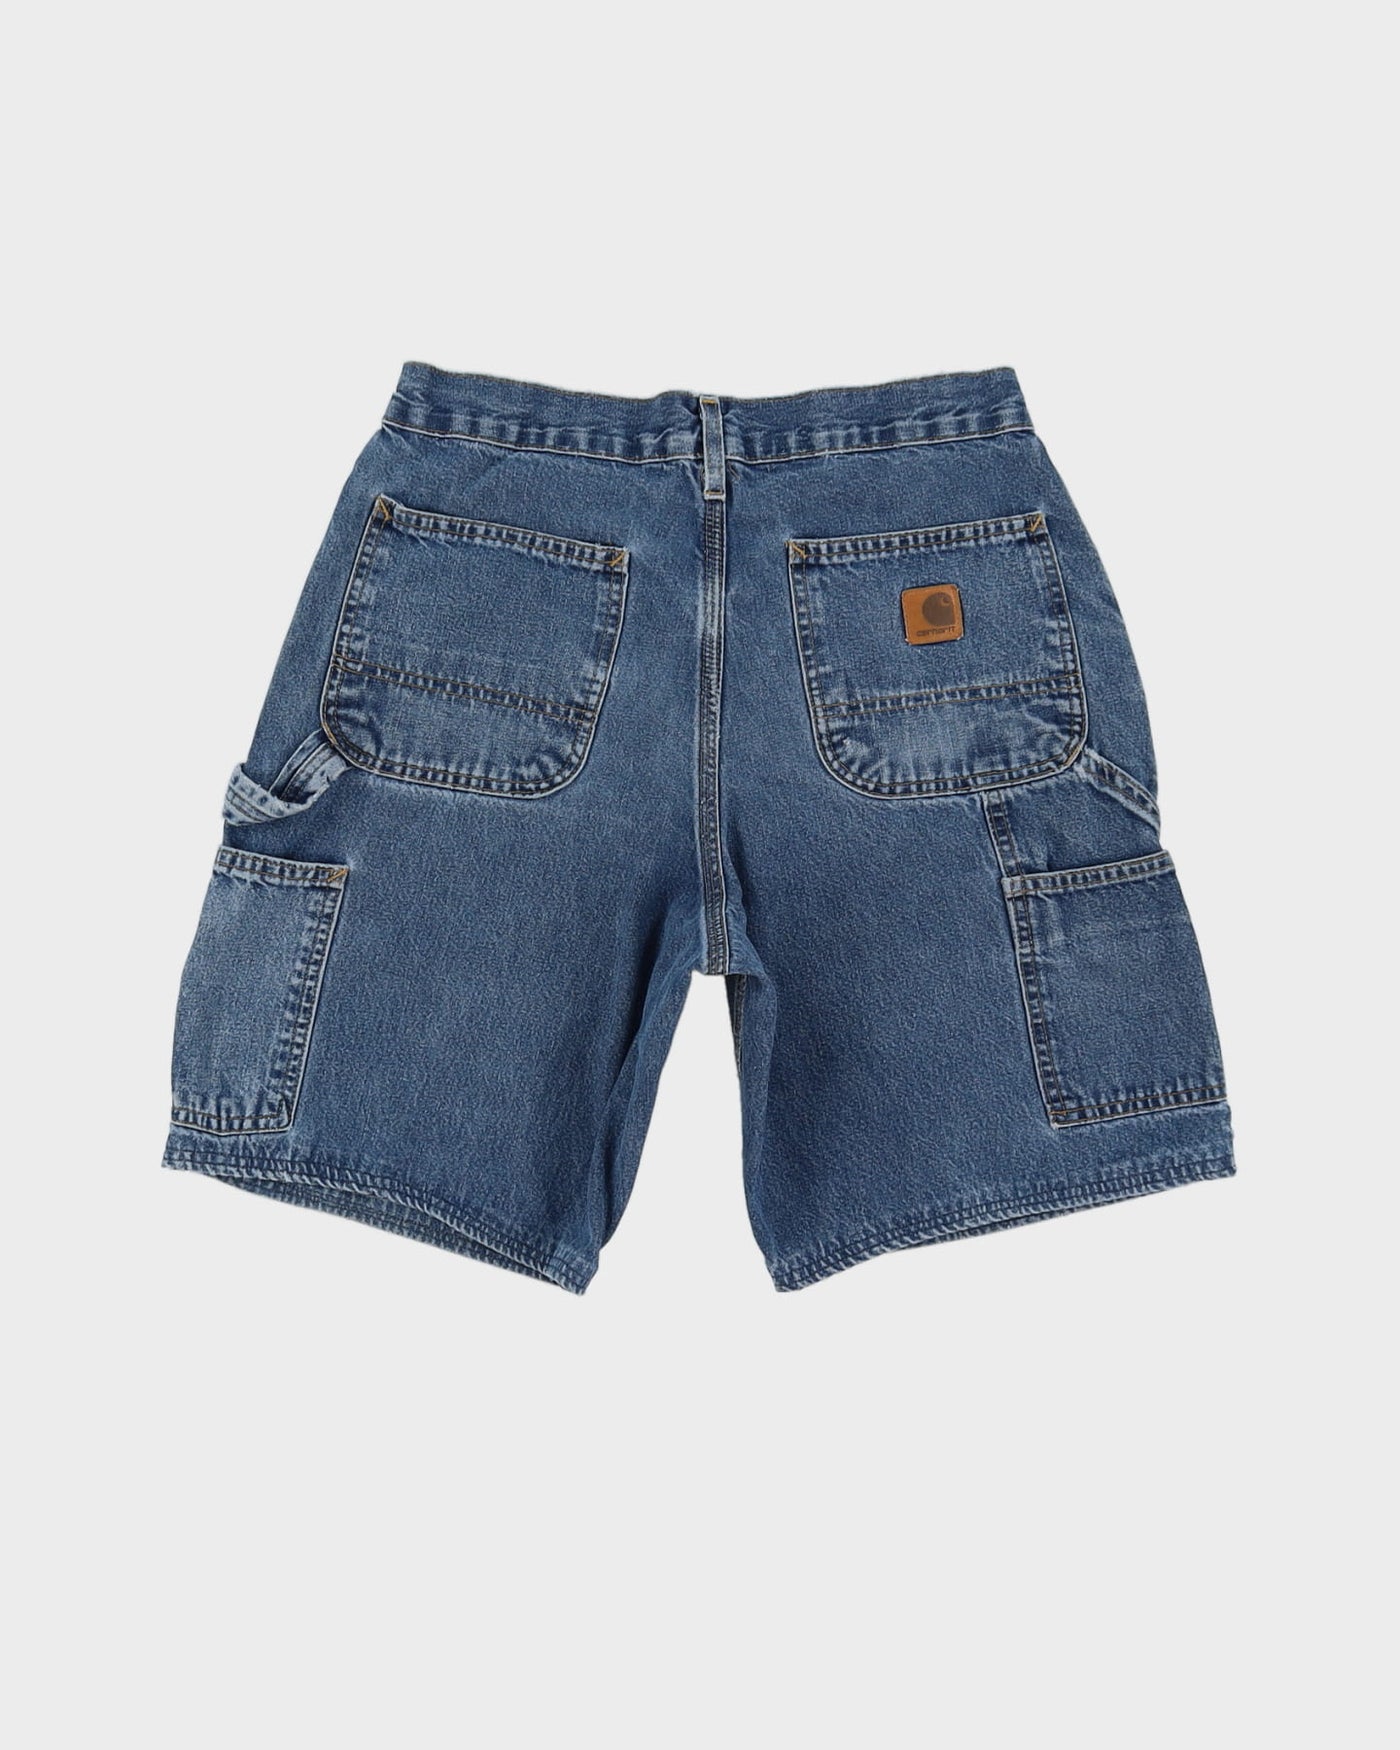 Carhartt Blue Denim Carpenter Shorts - W30